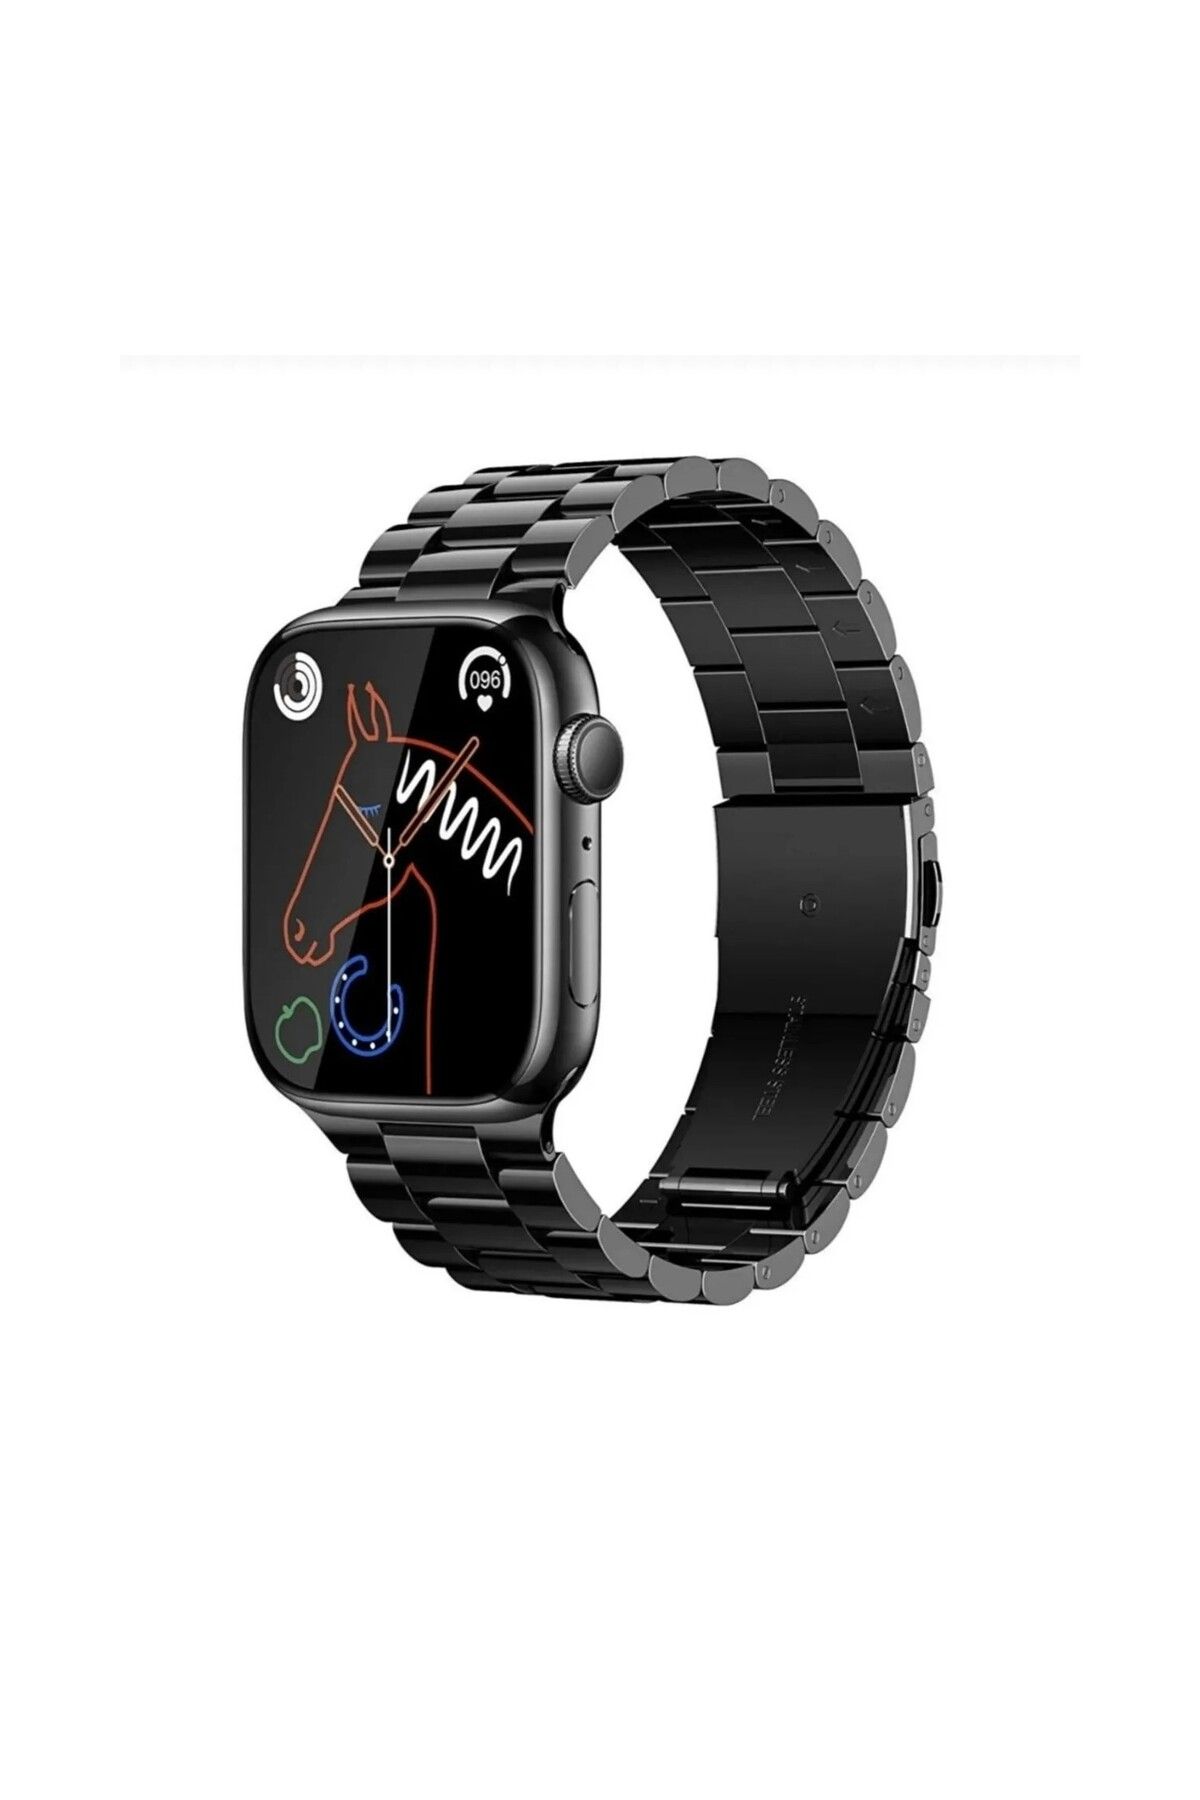 Winex Mobile Winex Watch 8 WS92 Max Amoled Ekran Android İos HarmonyOs Uyumlu Akıllı Saat Siyah